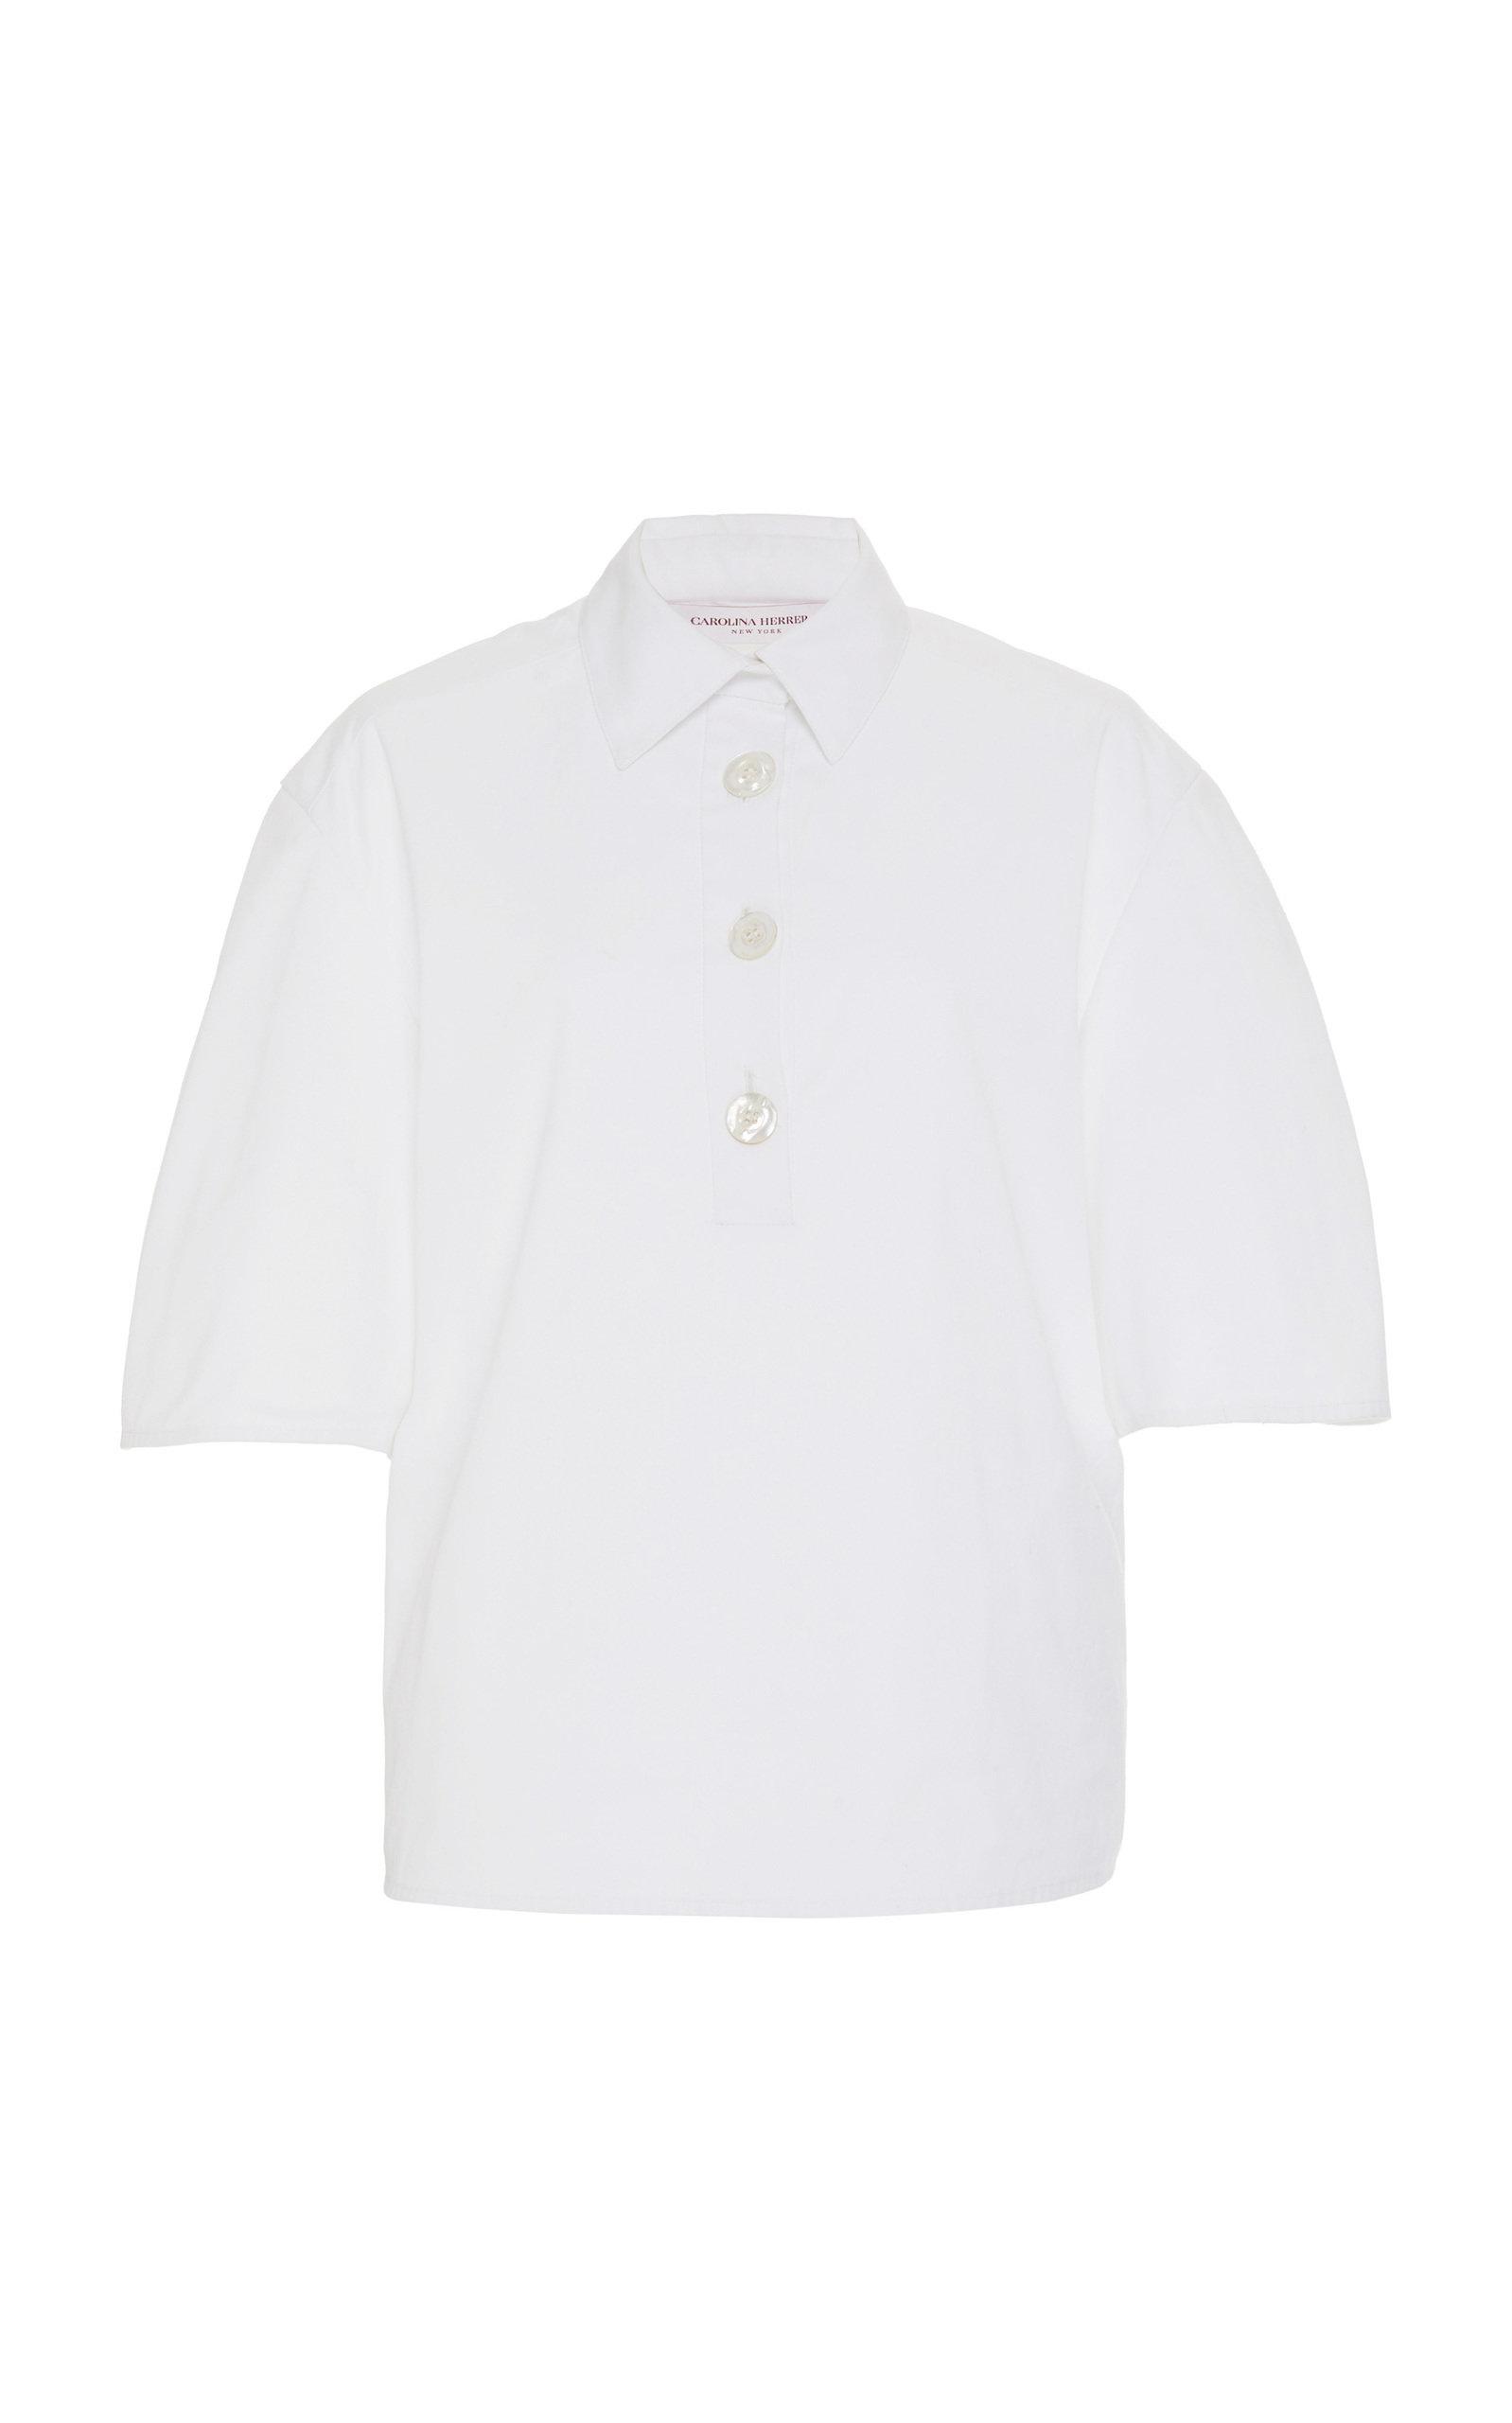 Carolina Herrera Cotton Polo Shirt in White - Lyst